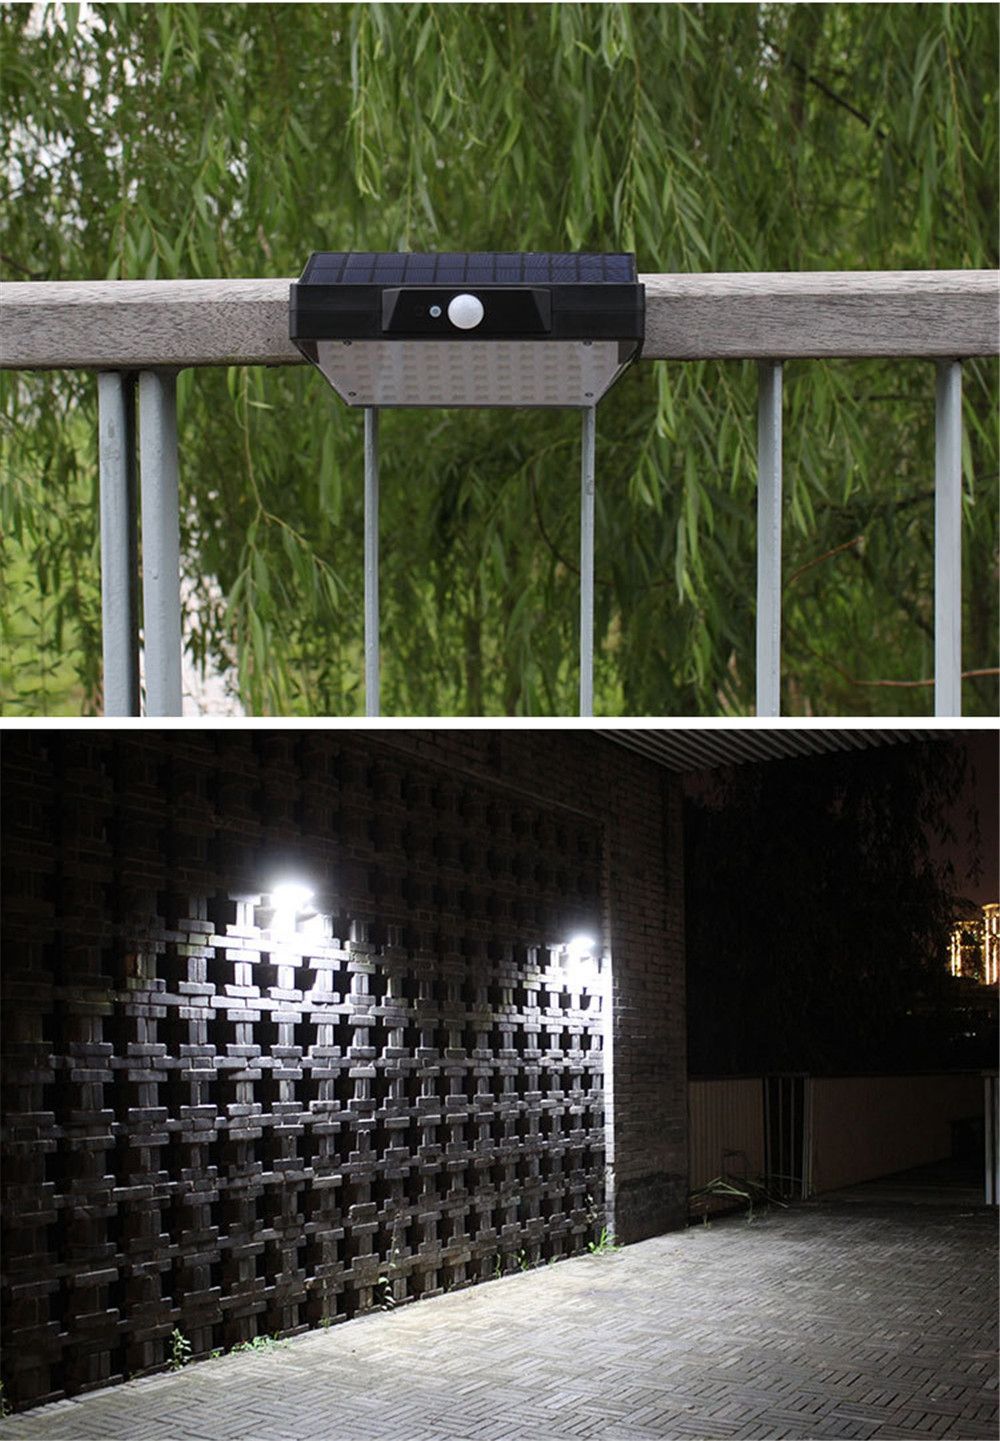 Solar-Powered-78-LED-PIR-Motion-Sensor-Waterproof-Wall-Light-Outdoor-Garden-Emergency-Security-Lamp-1335417